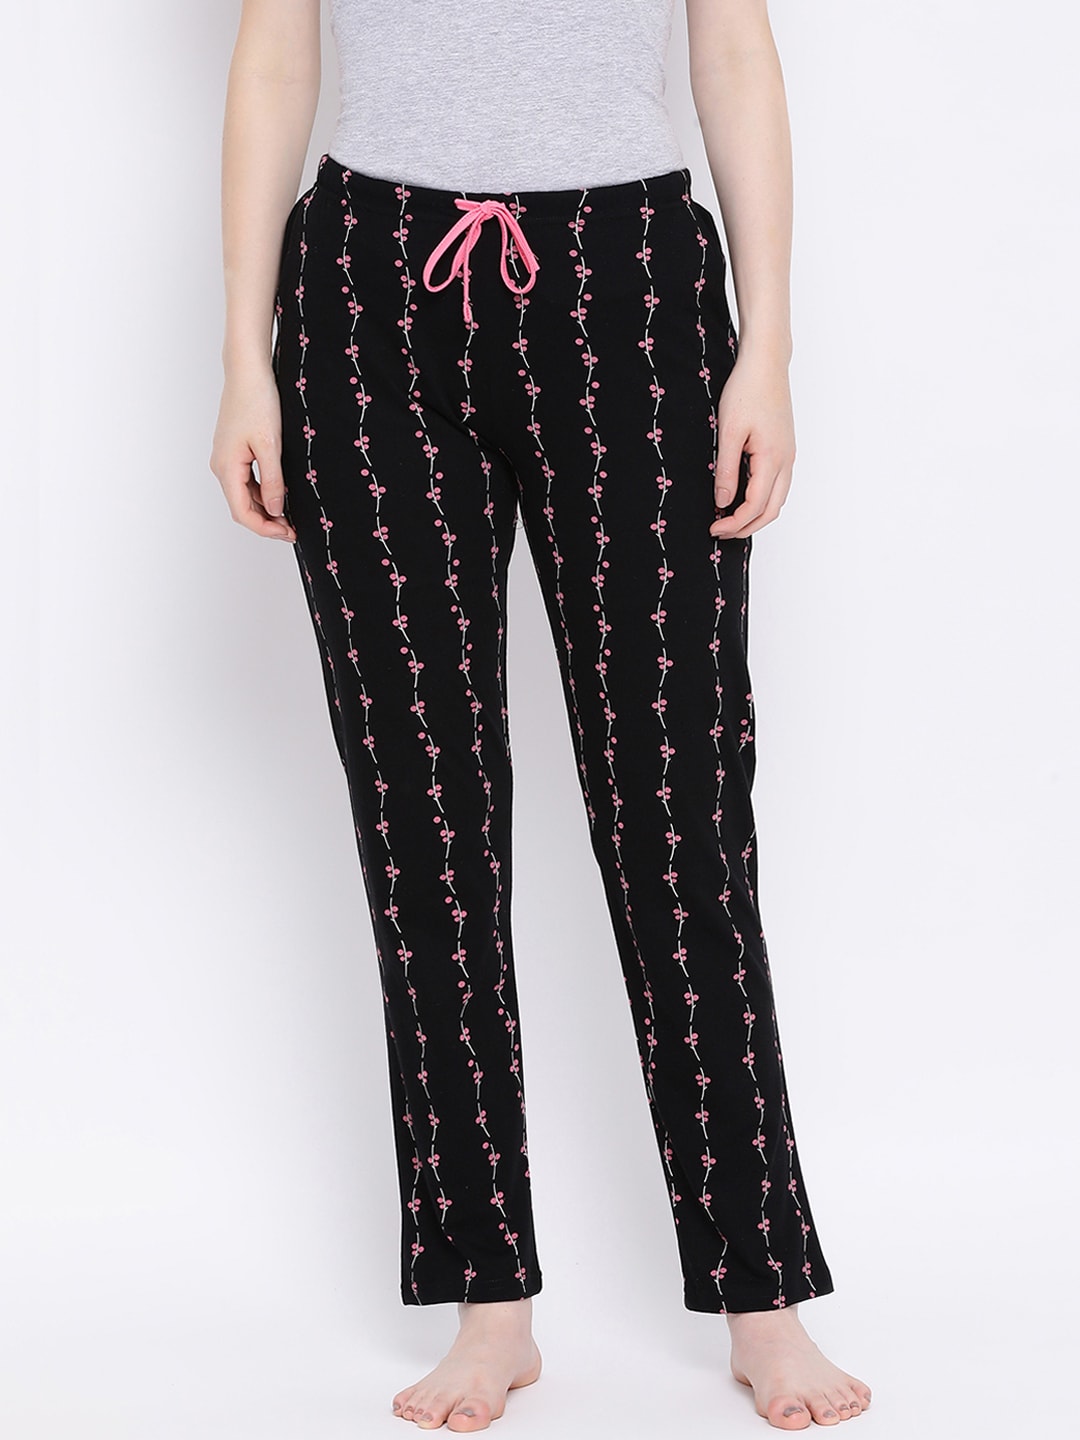 Kanvin Women Black & Pink Floral Print Pyjamas Price in India